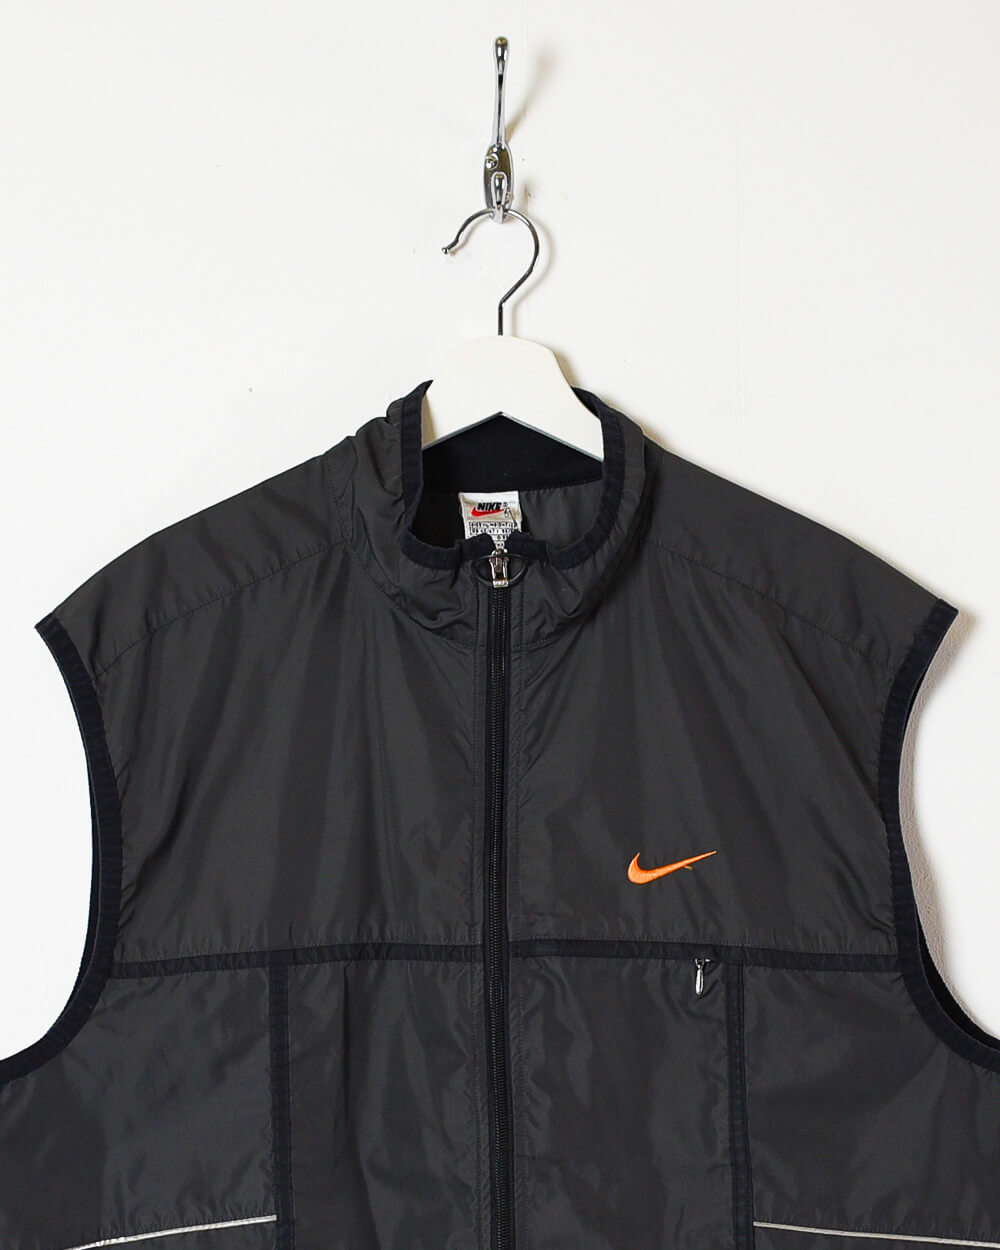 Black Nike Jacket Bodywarmer - X-Large